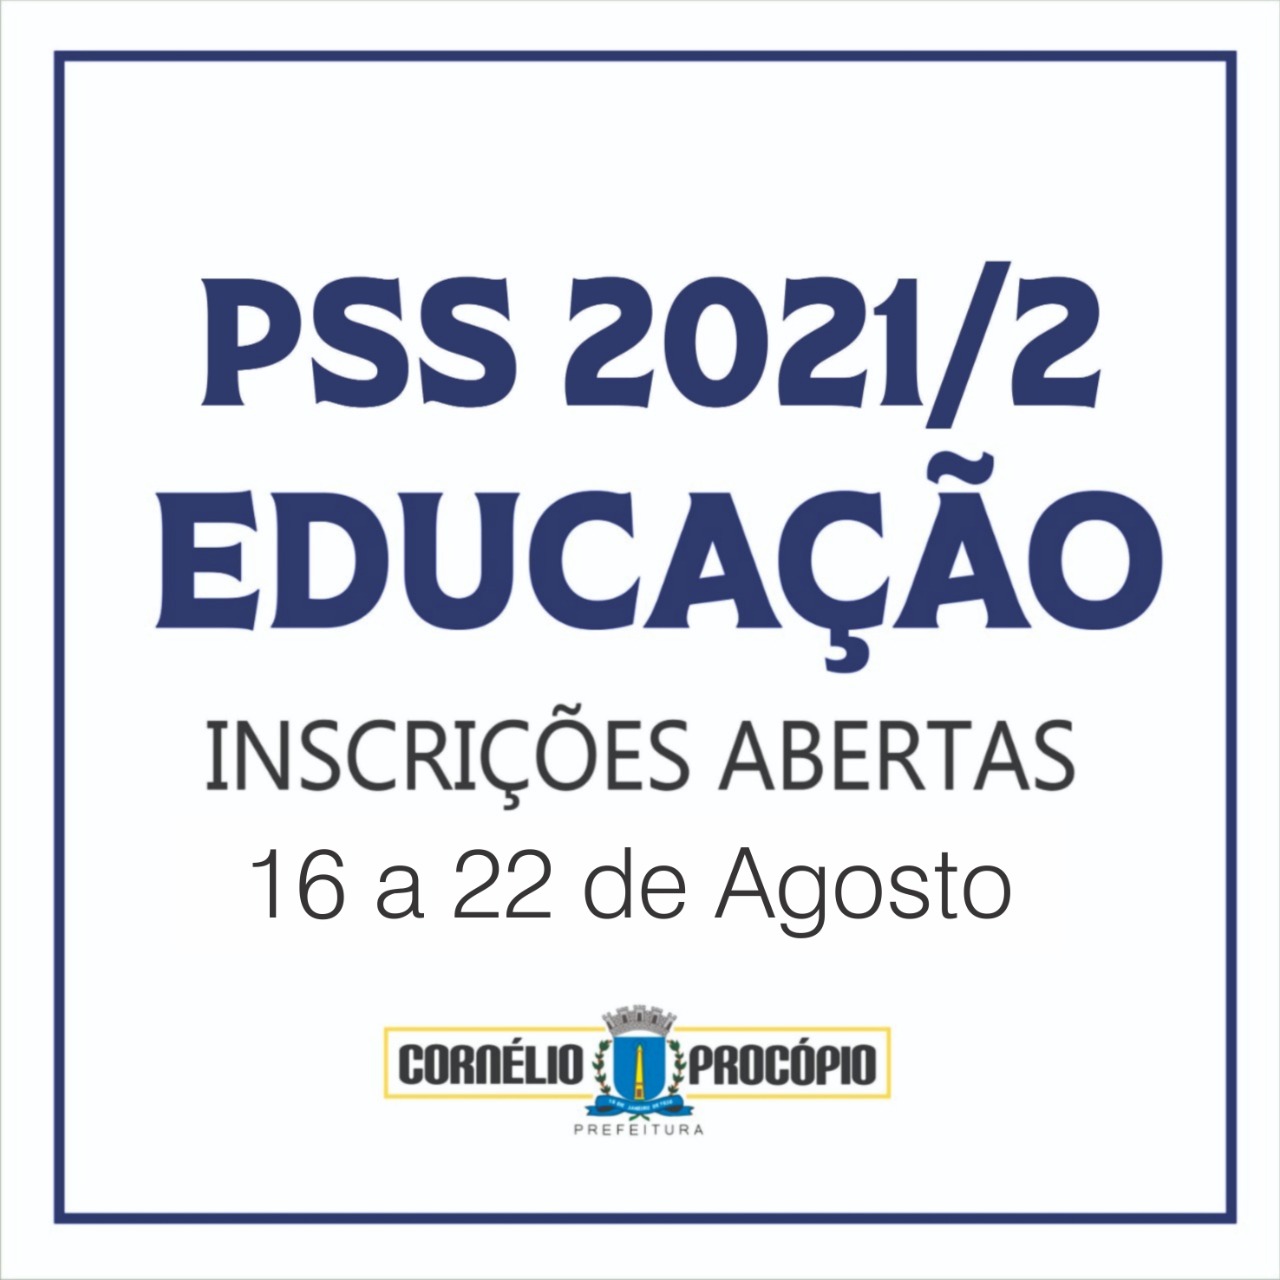 pss_educacao_2021_2